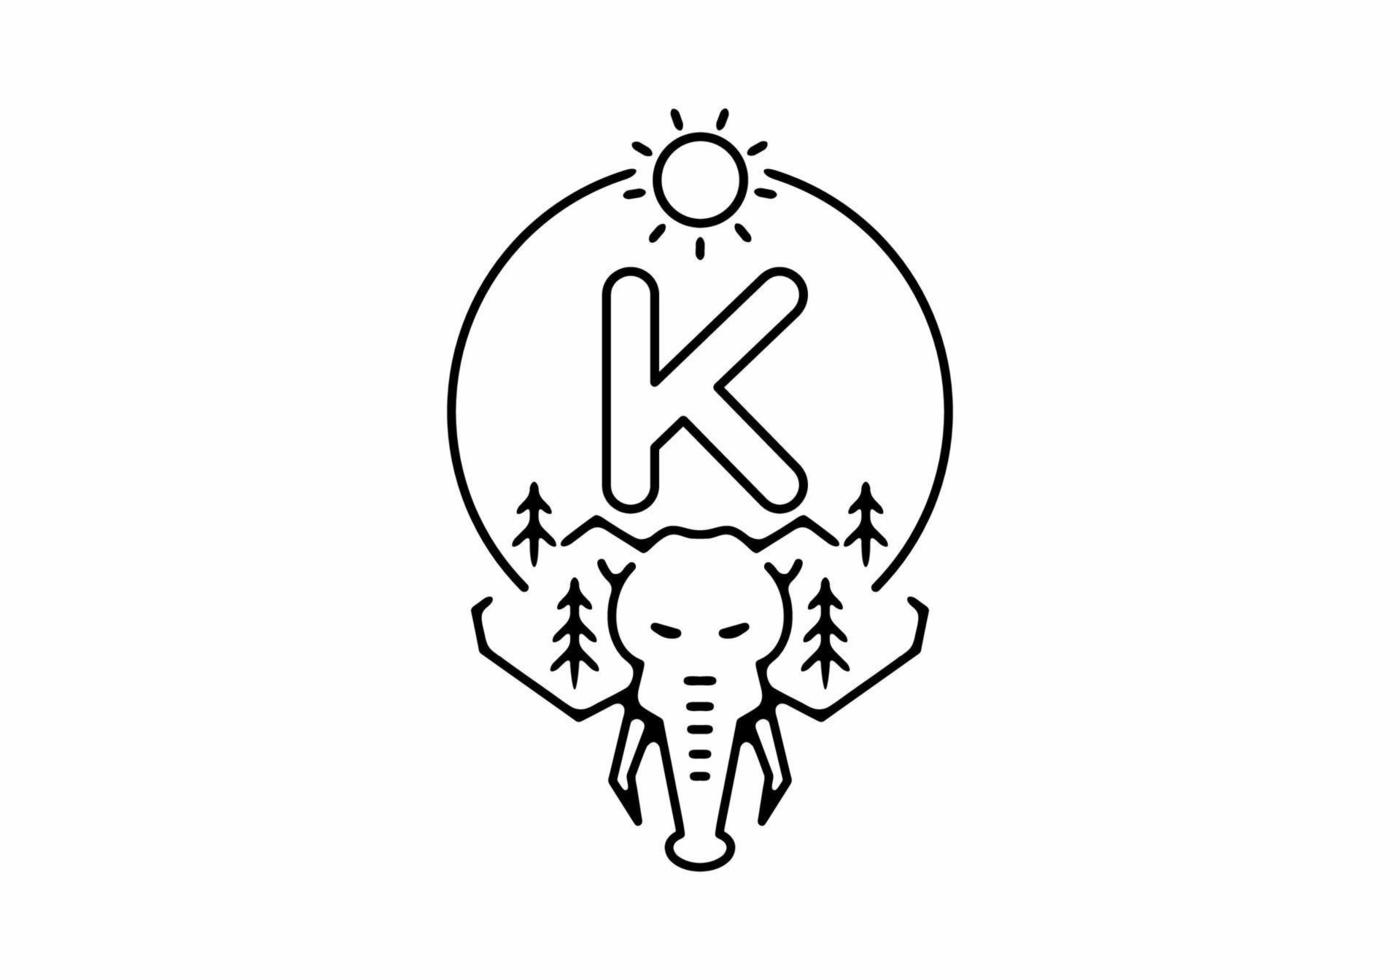 Black line art illustration of elephant head with K initial letter vector